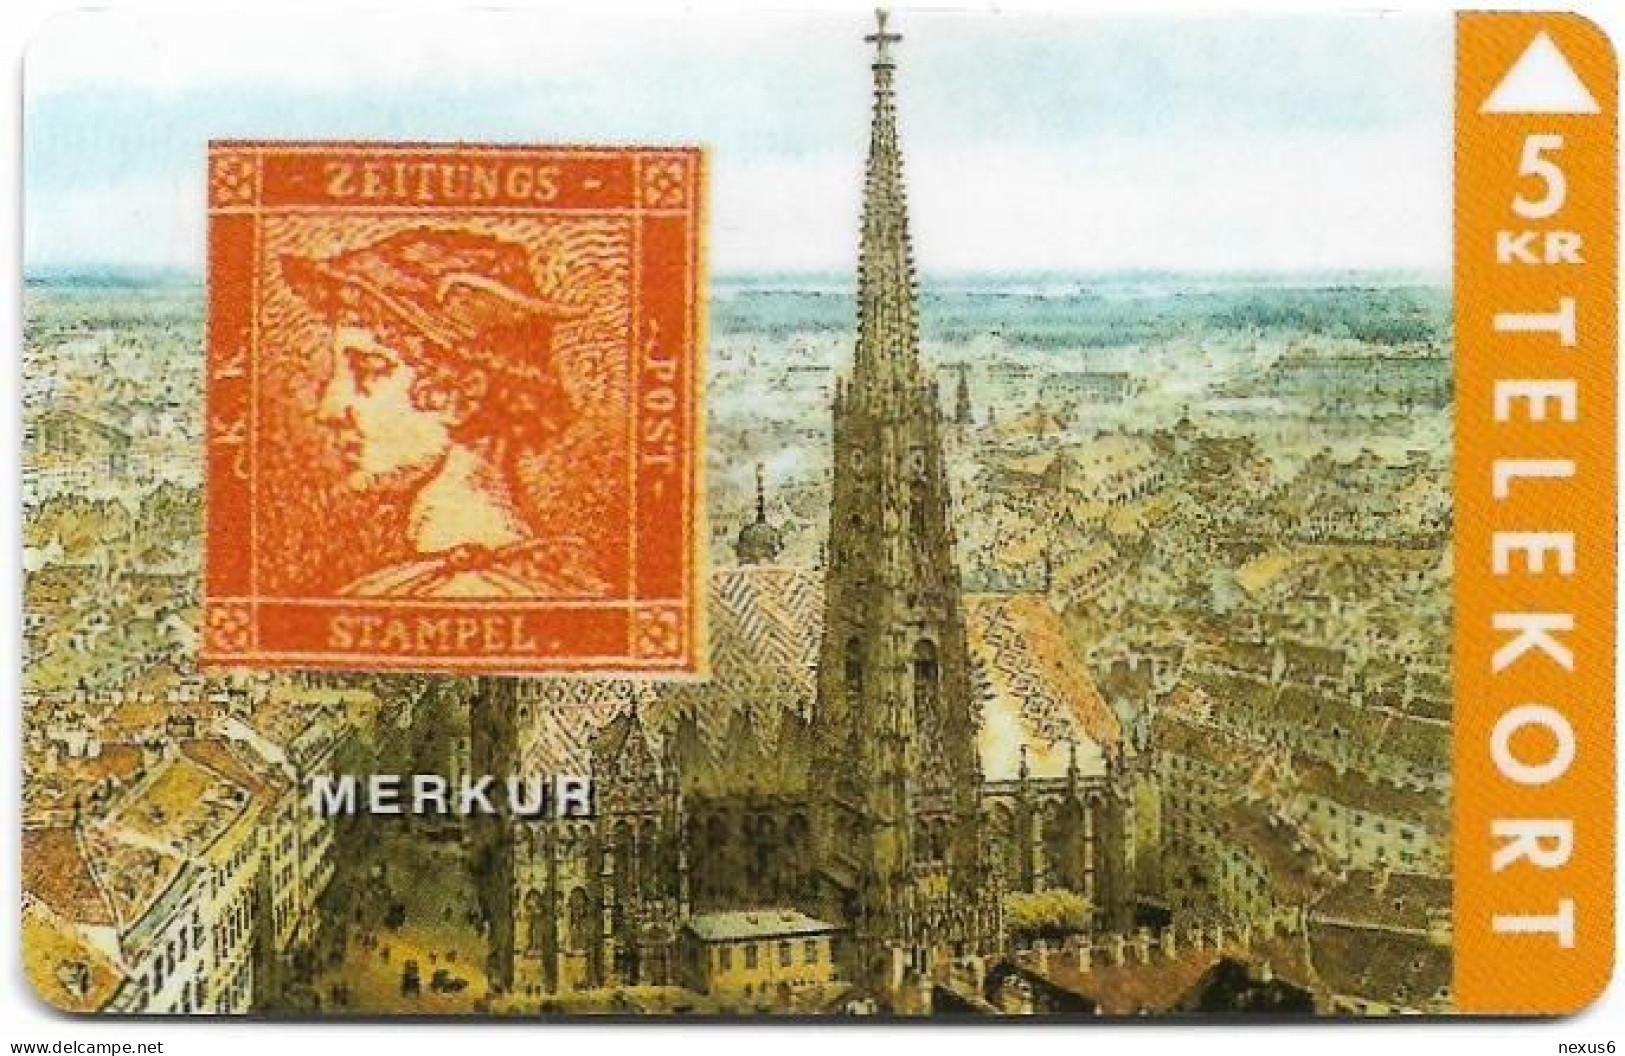 Denmark - TS - Rare Stamps - Merkur - TDTP044 - 04.1994, 5Kr, 2.000ex, Used - Dänemark